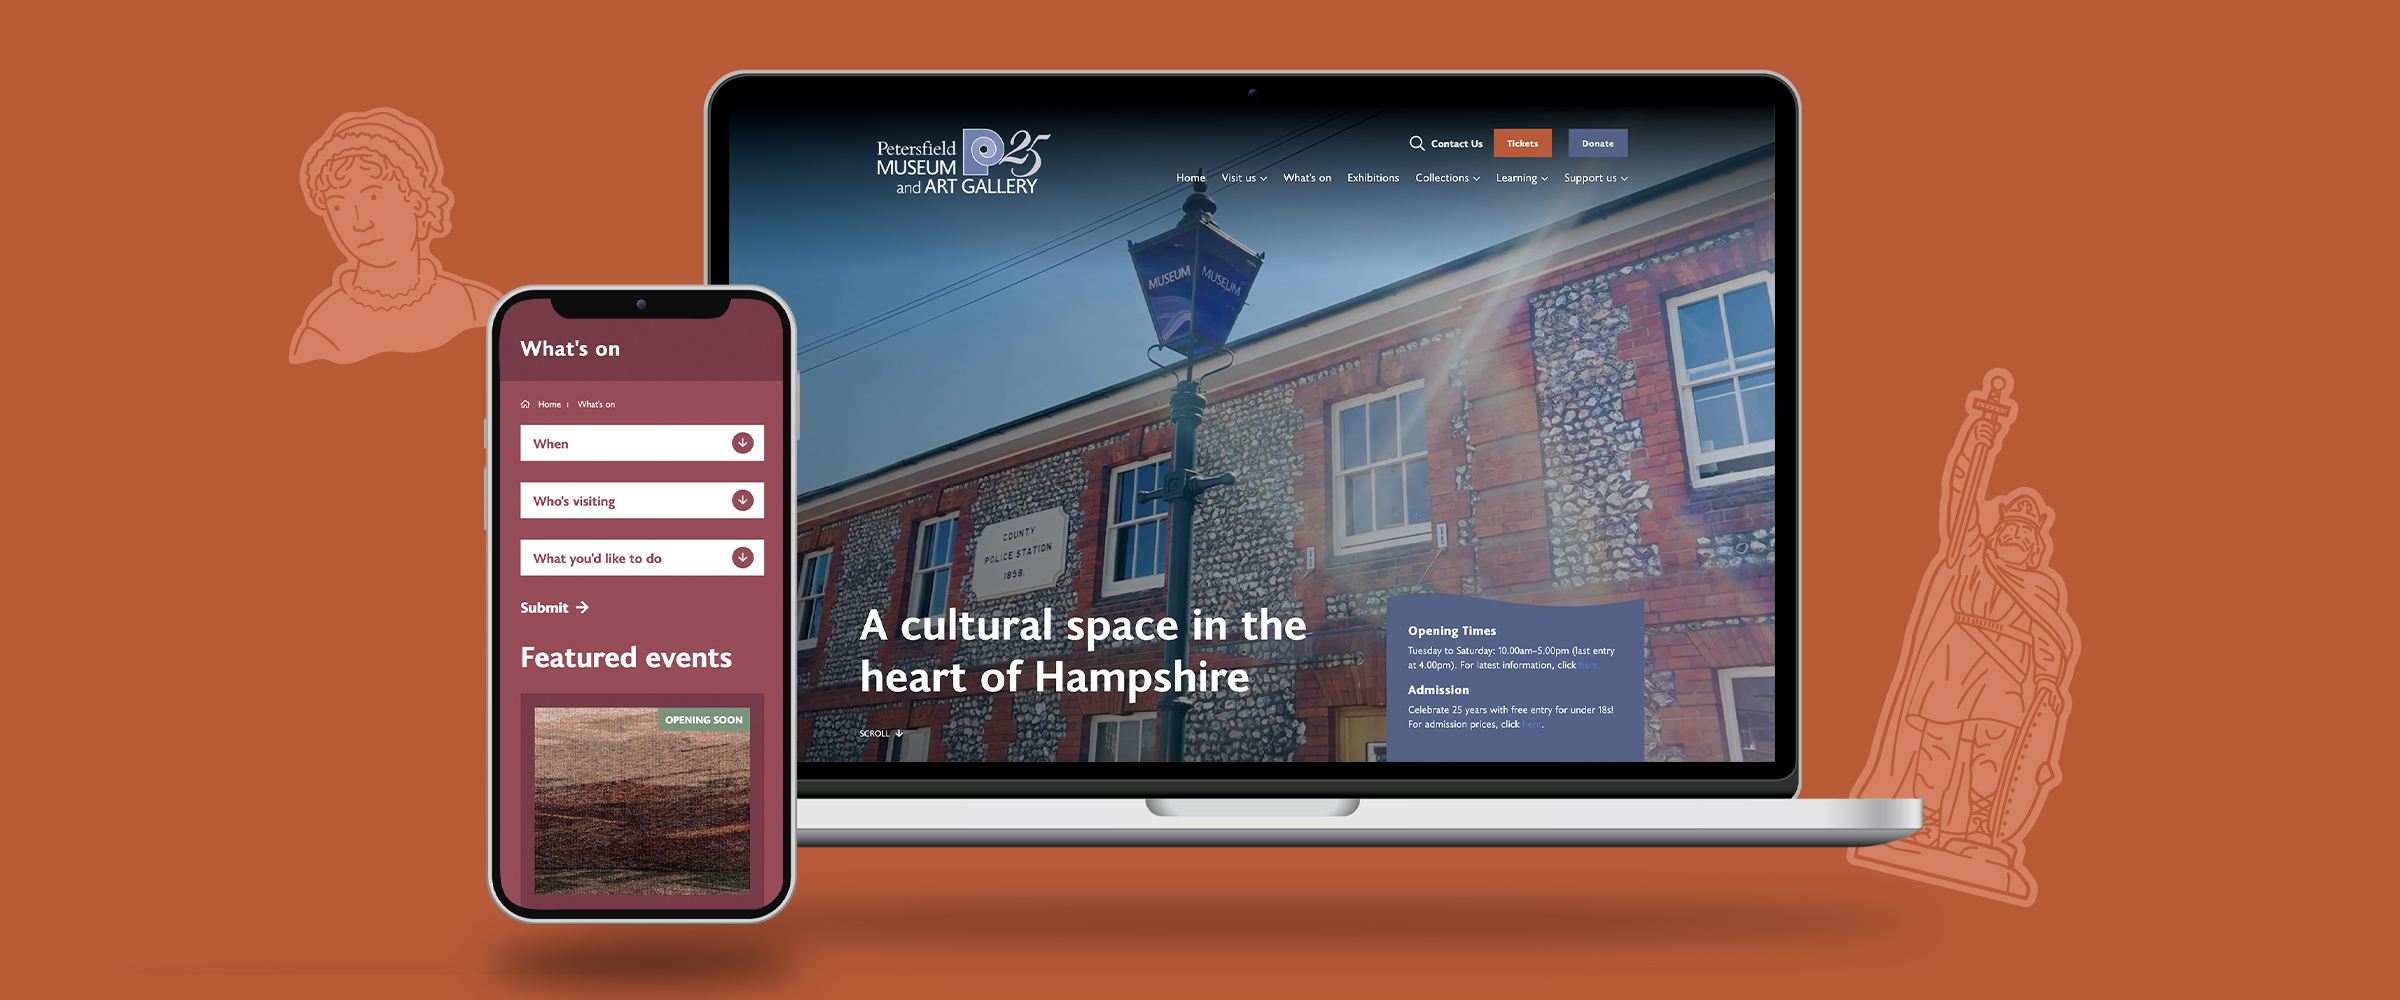 Petersfield Museum and Art Gallery Website desktop and mobile